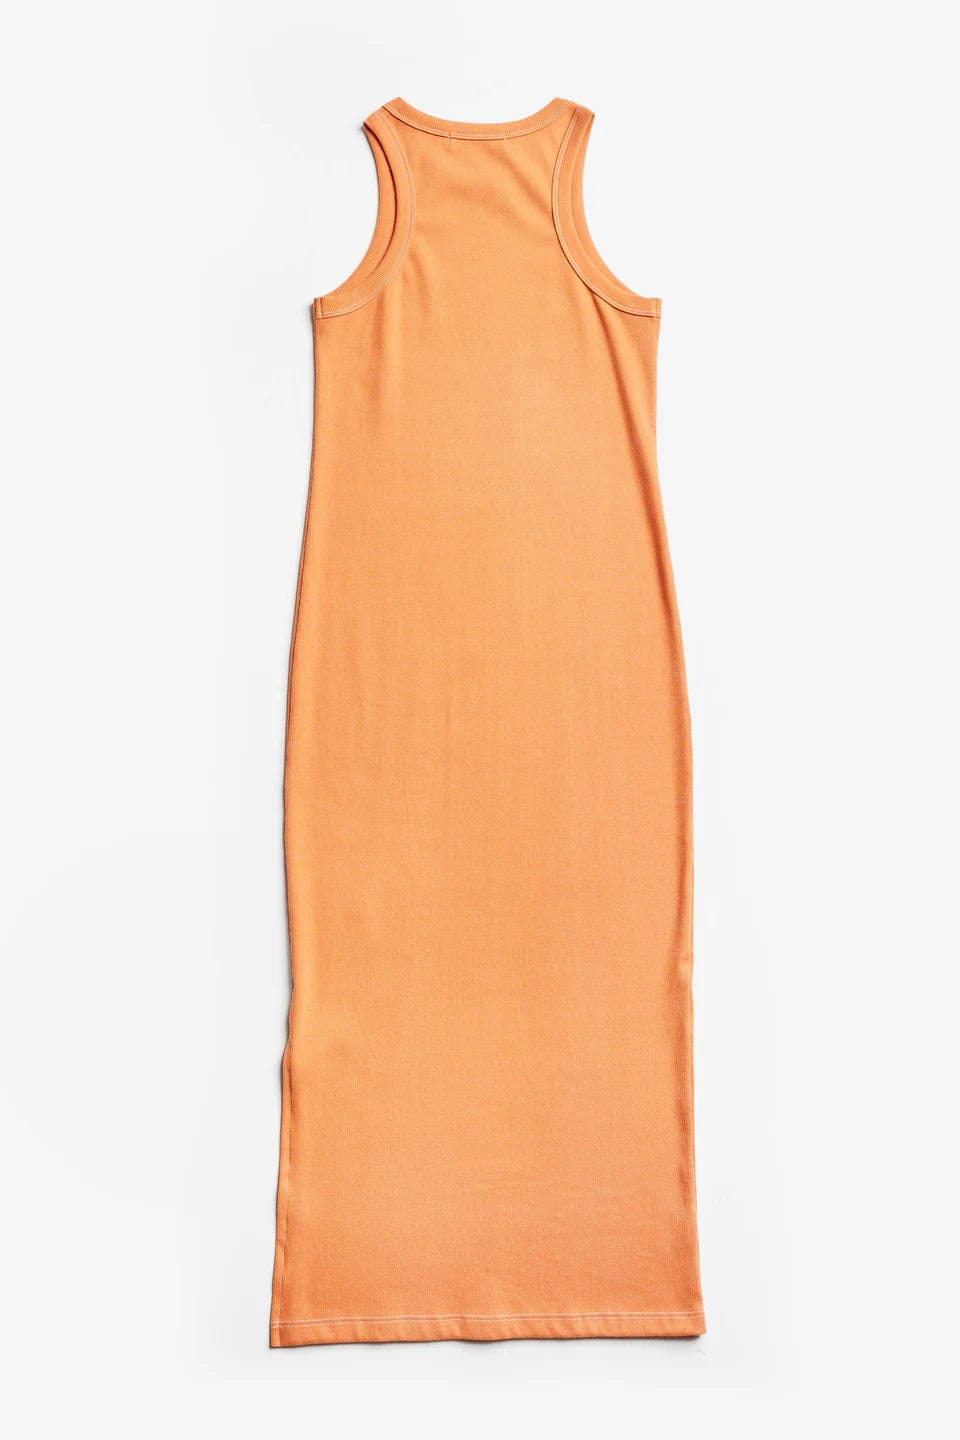 Spire Rib Dress - Orange